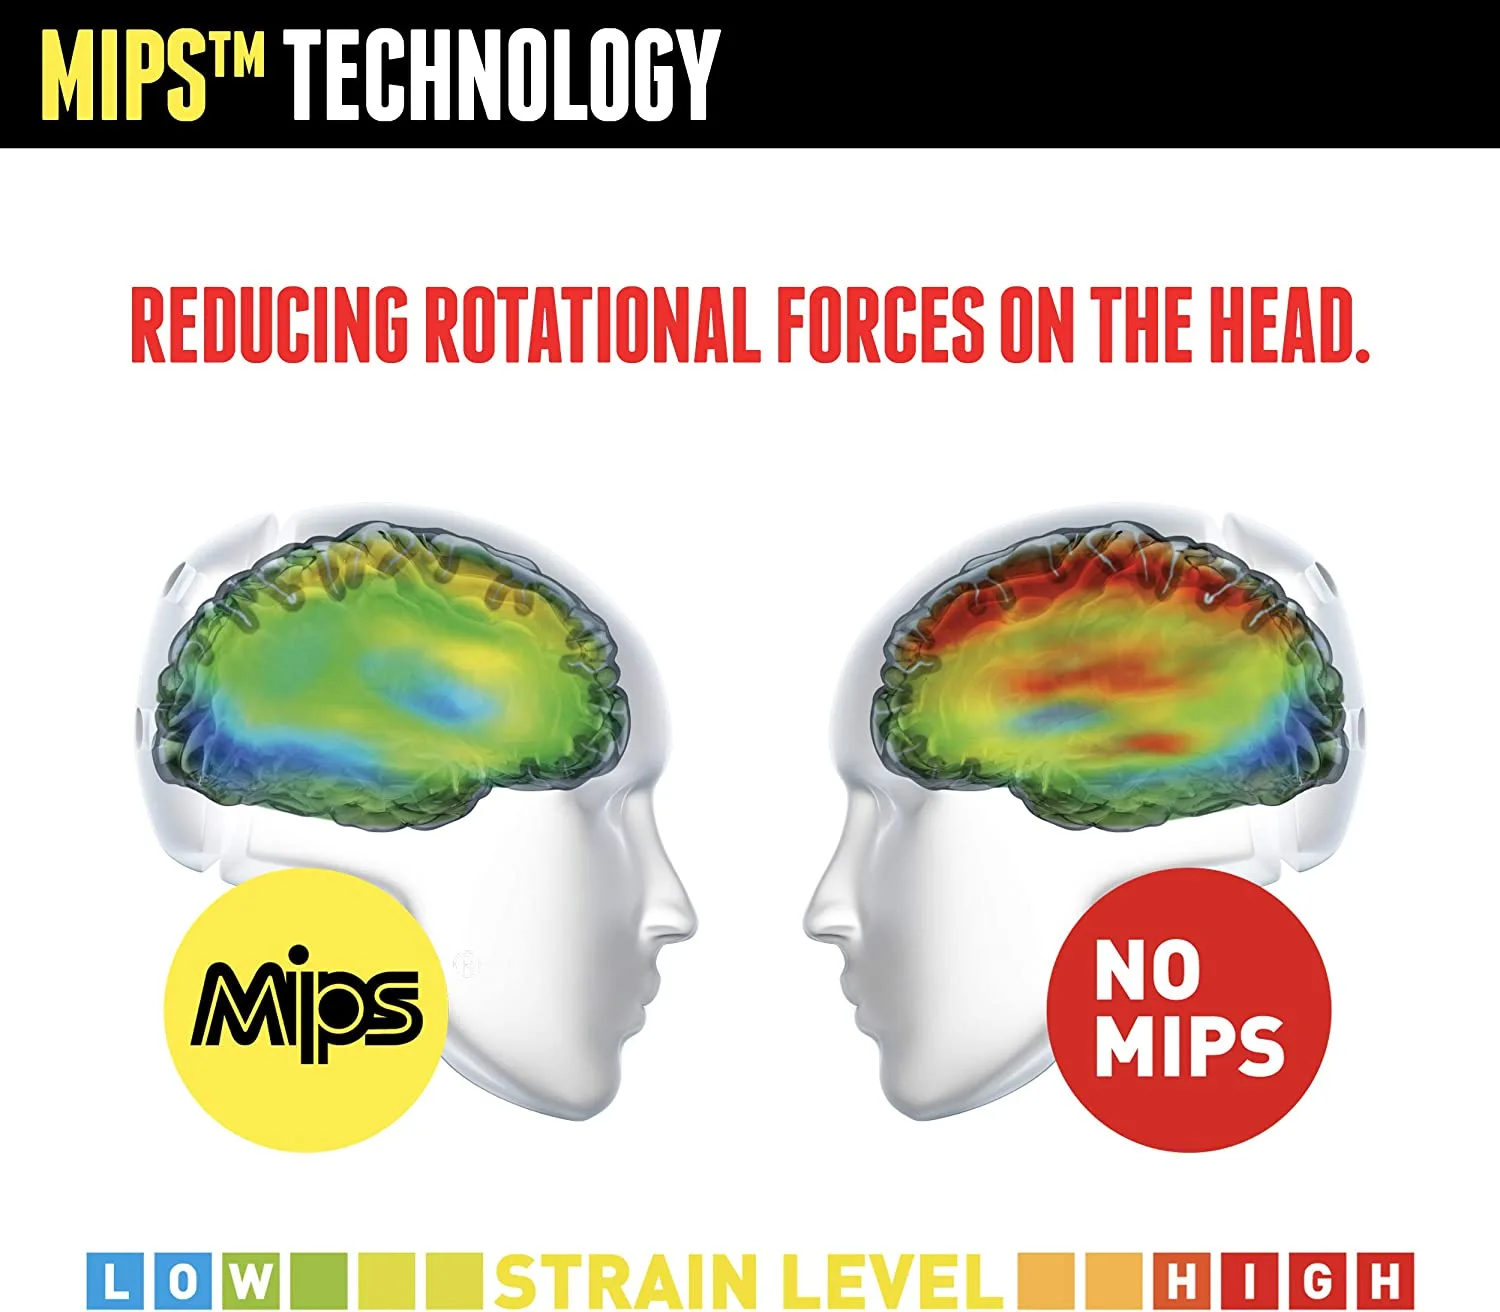 MIPS technology